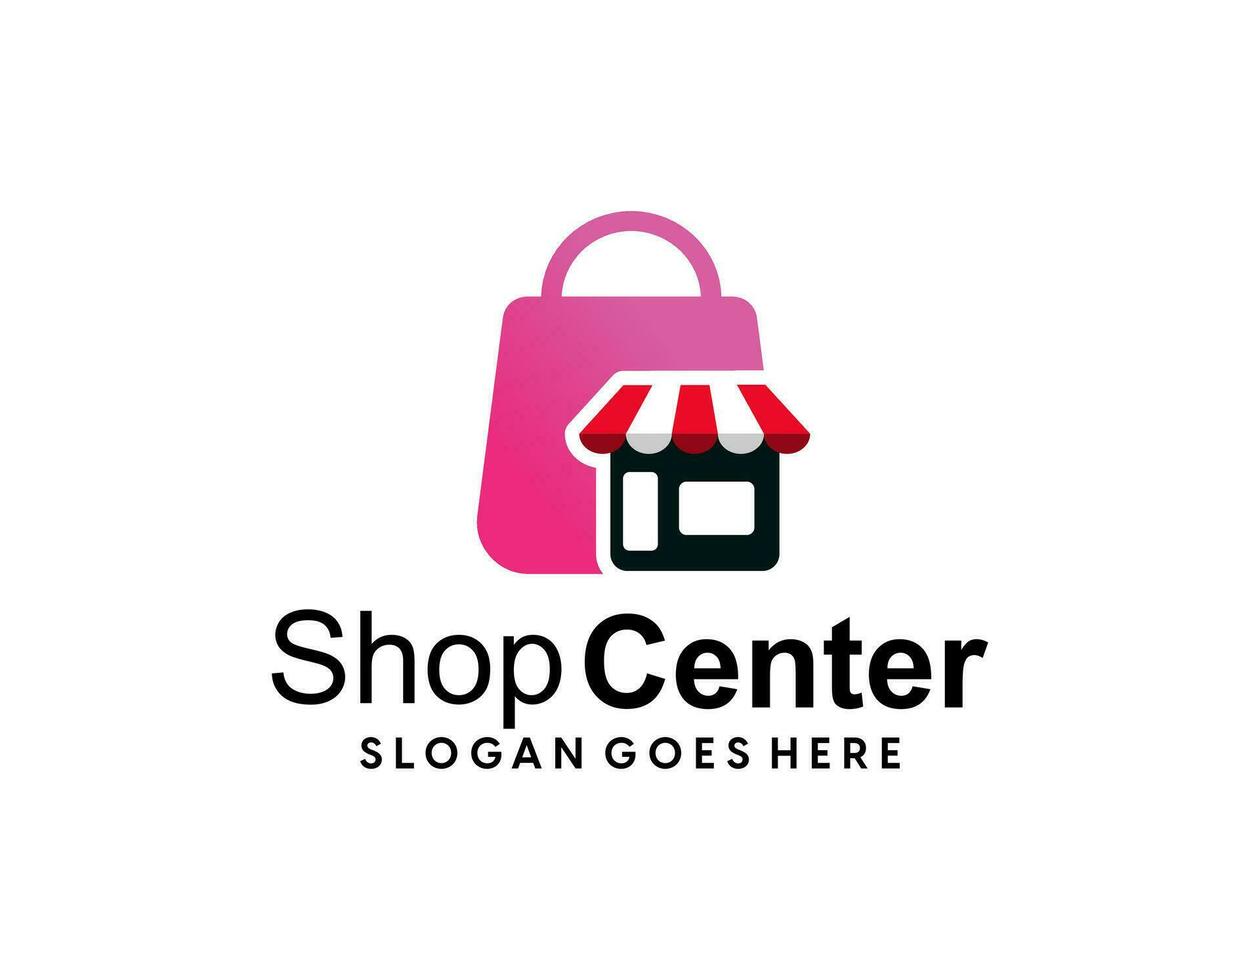 Online Shop Logo designs Template. Illustration vector graphic of shopping cart and shop bag combination logo design concept